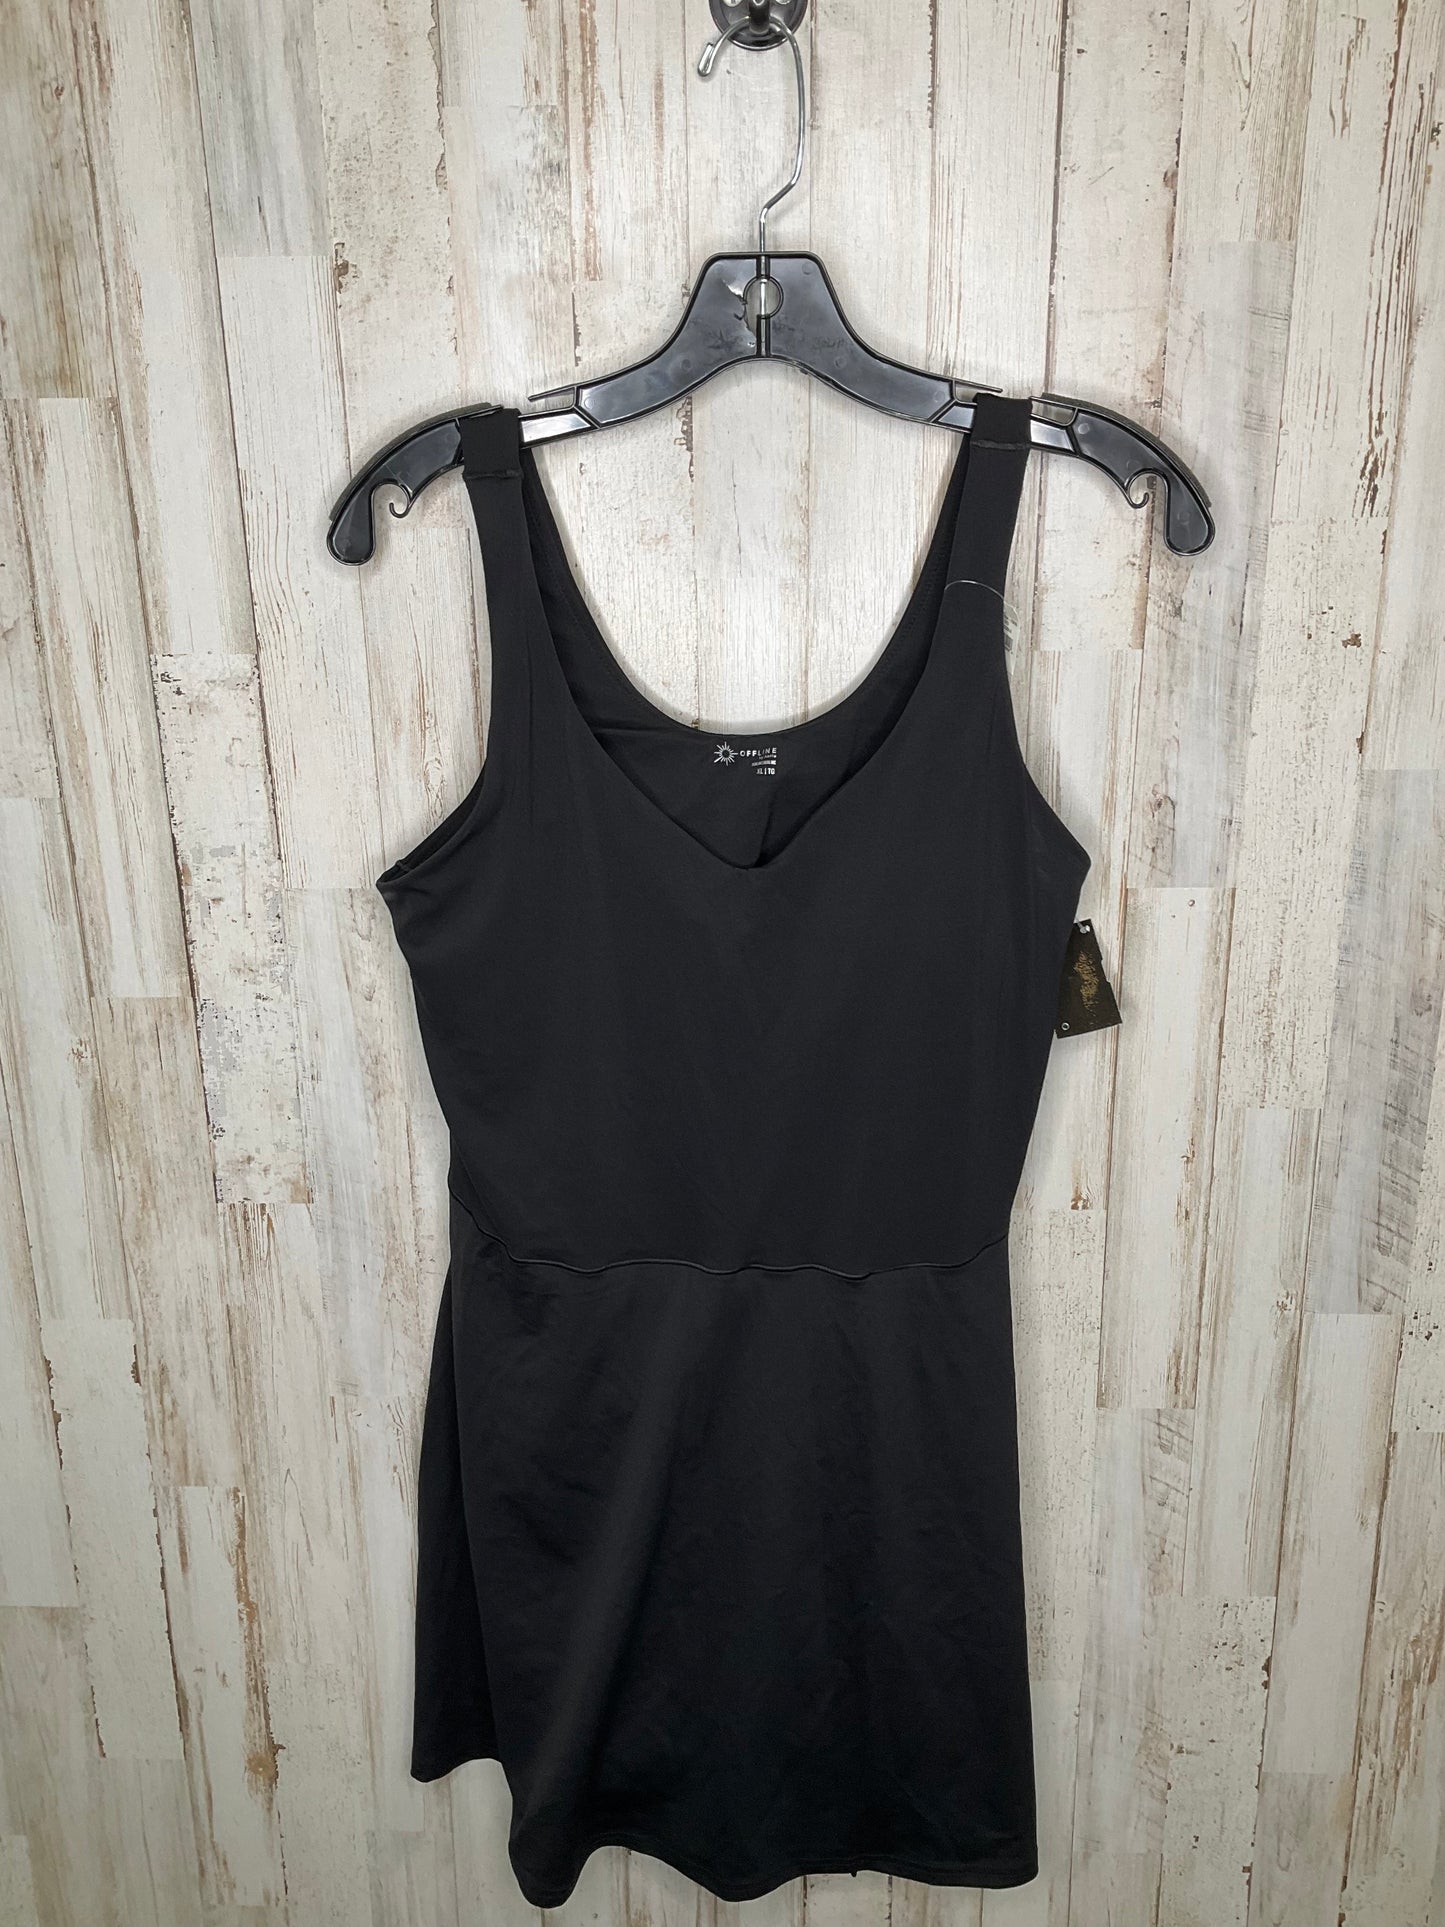 Black Athletic Dress Aerie, Size Xl